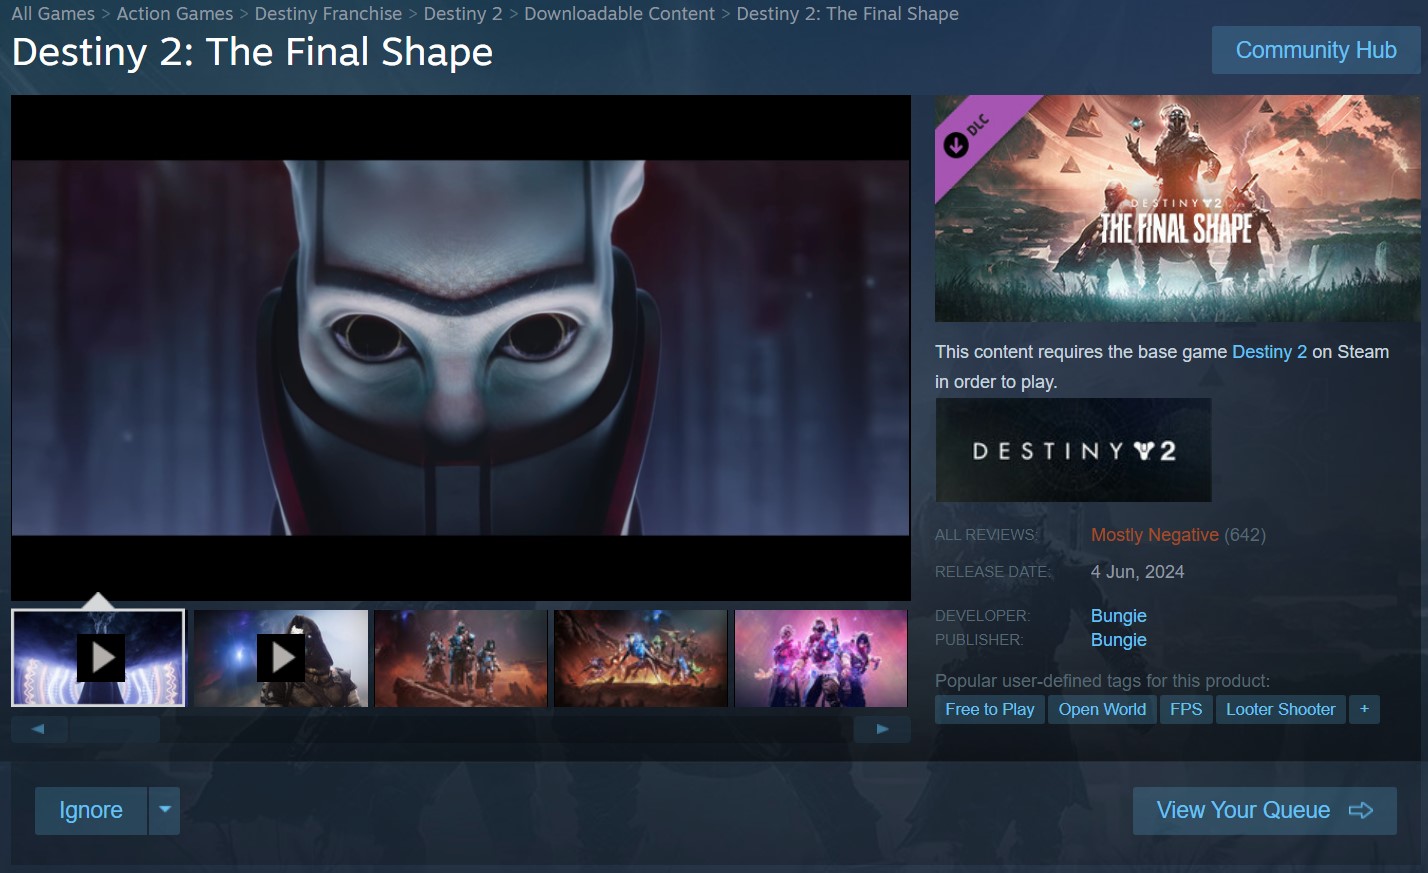 Destiny 2 The Final Shape Steam Reviews Mostly Negative